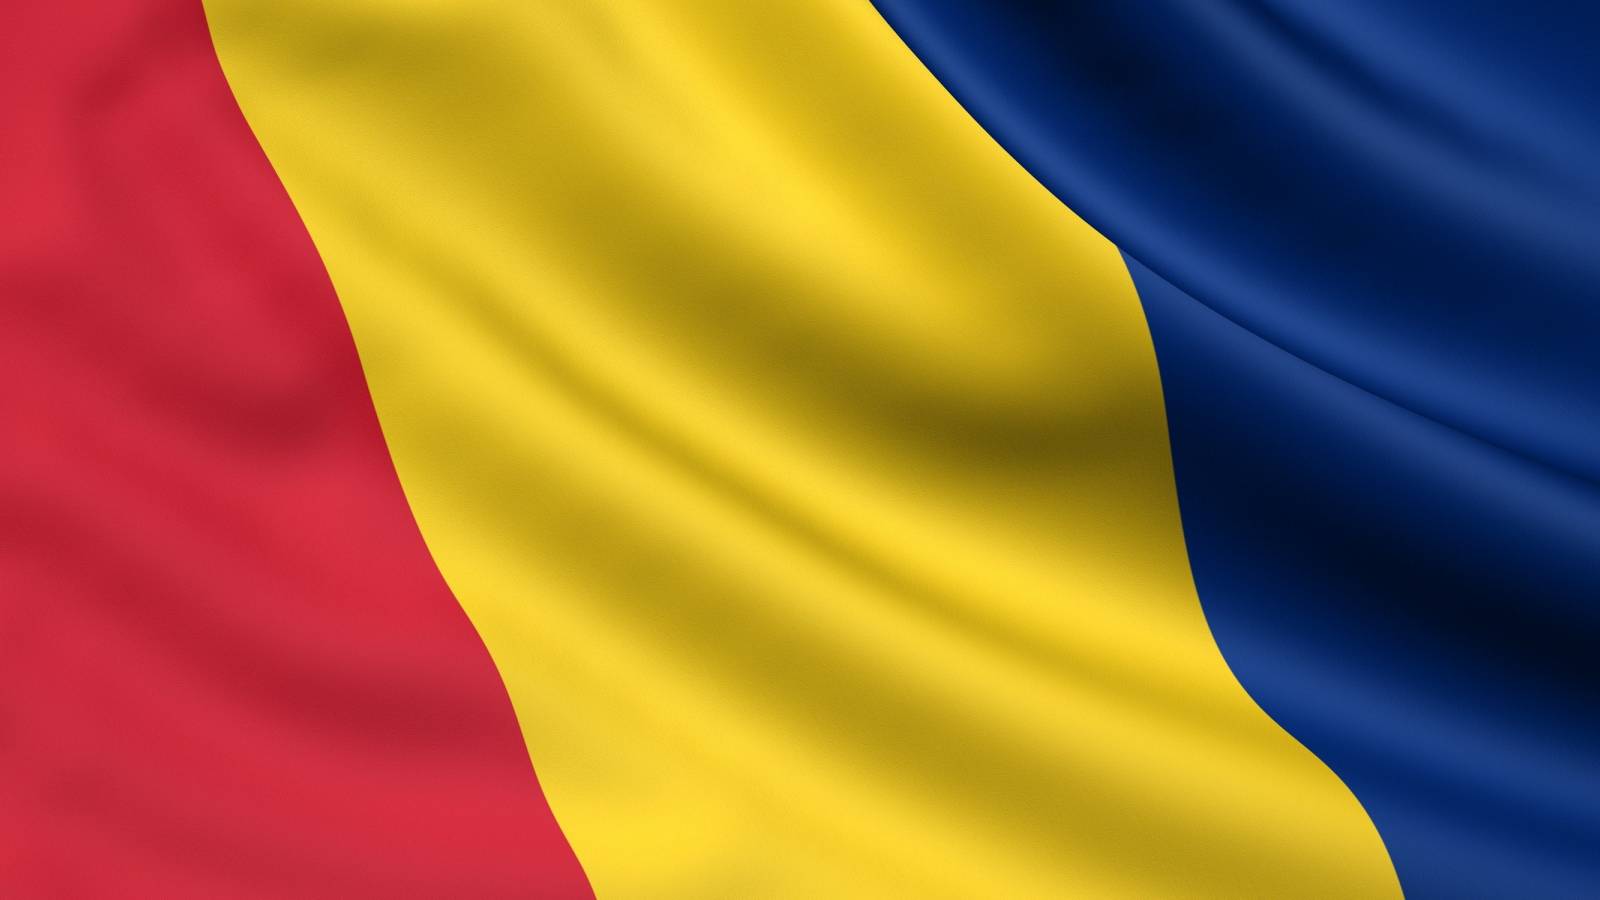 Dosis 4 anti-COVID-vaccin nu officieel toegediend Roemenië